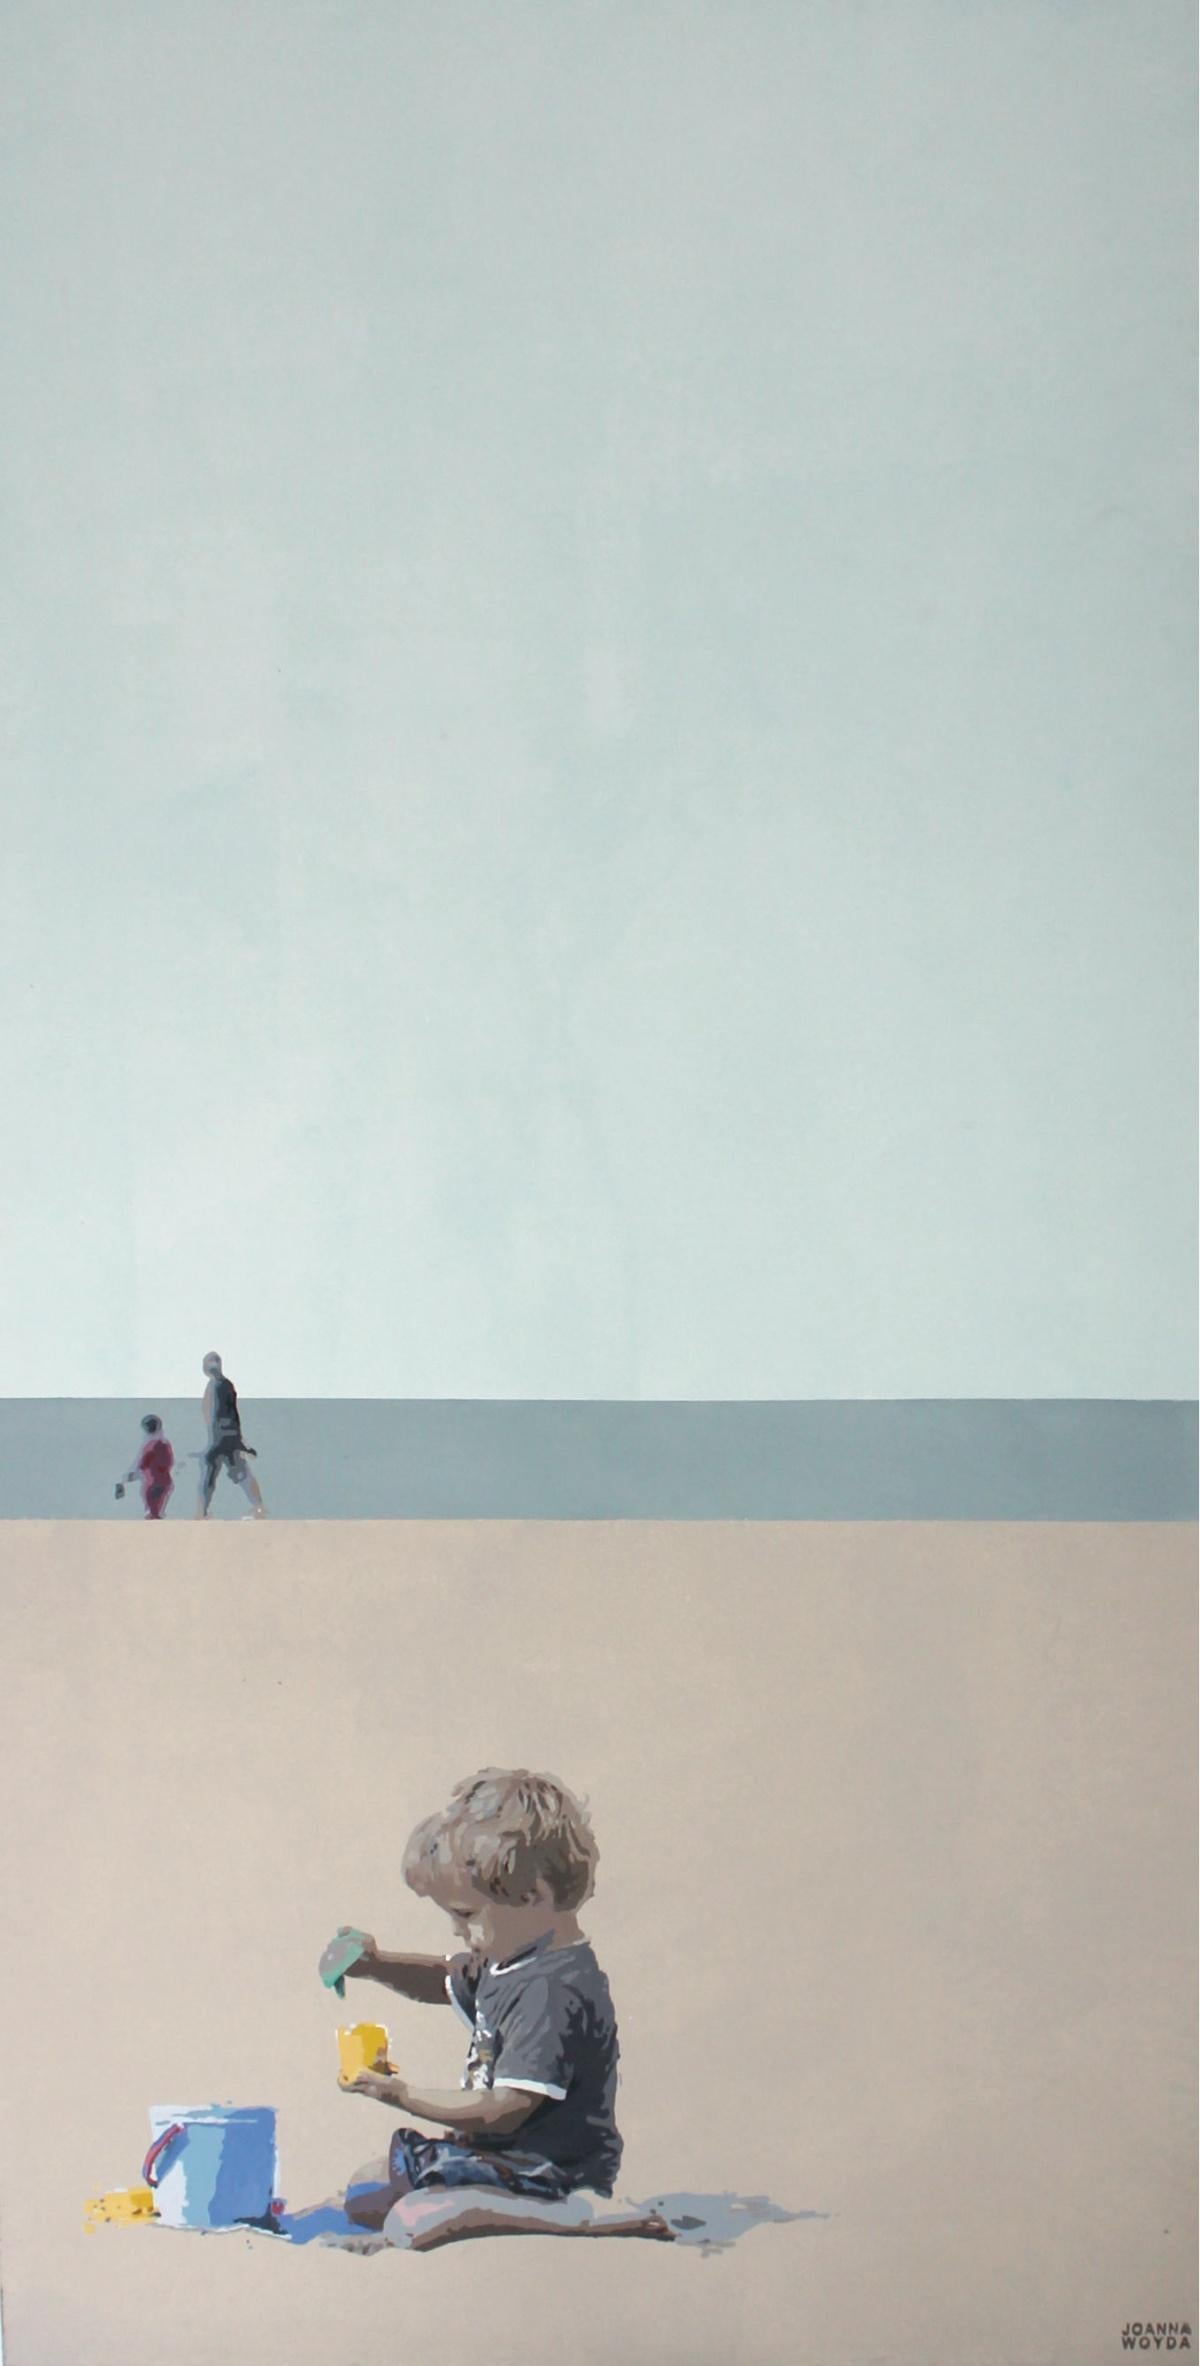 Joanna Woyda Landscape Painting - The Beach. Boy with buckets - Figurative Painting, Landscape,  Minimalism, Muted